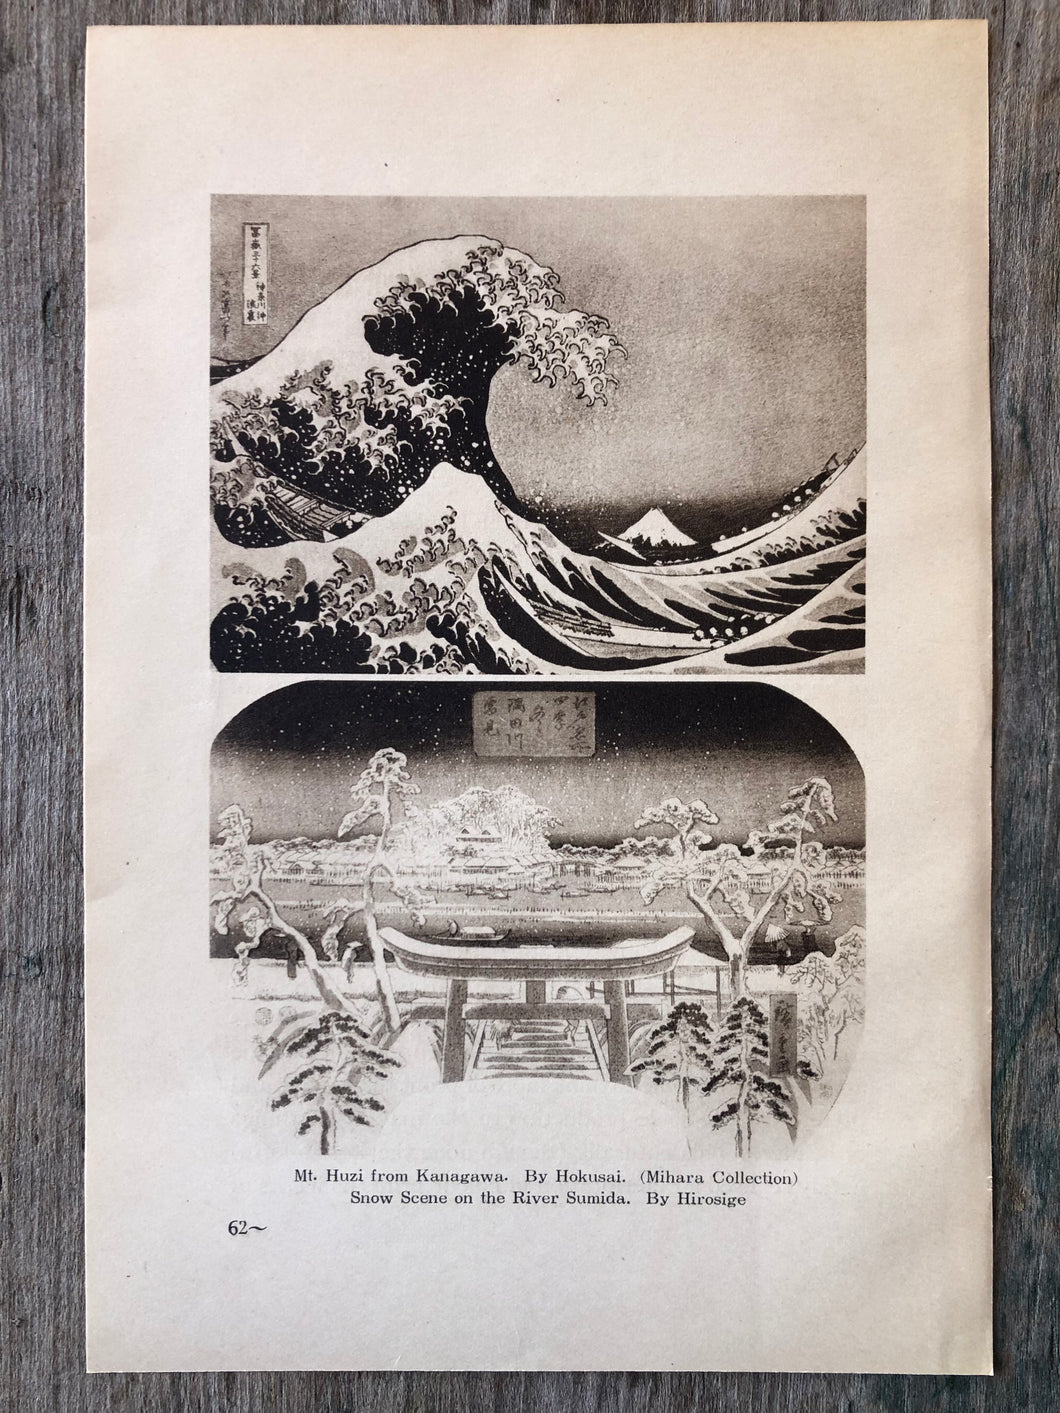 Print: Mt. Huzi from Kanagawa. By Hokusai. Snow Scene on the River Sumida. By Hirosige